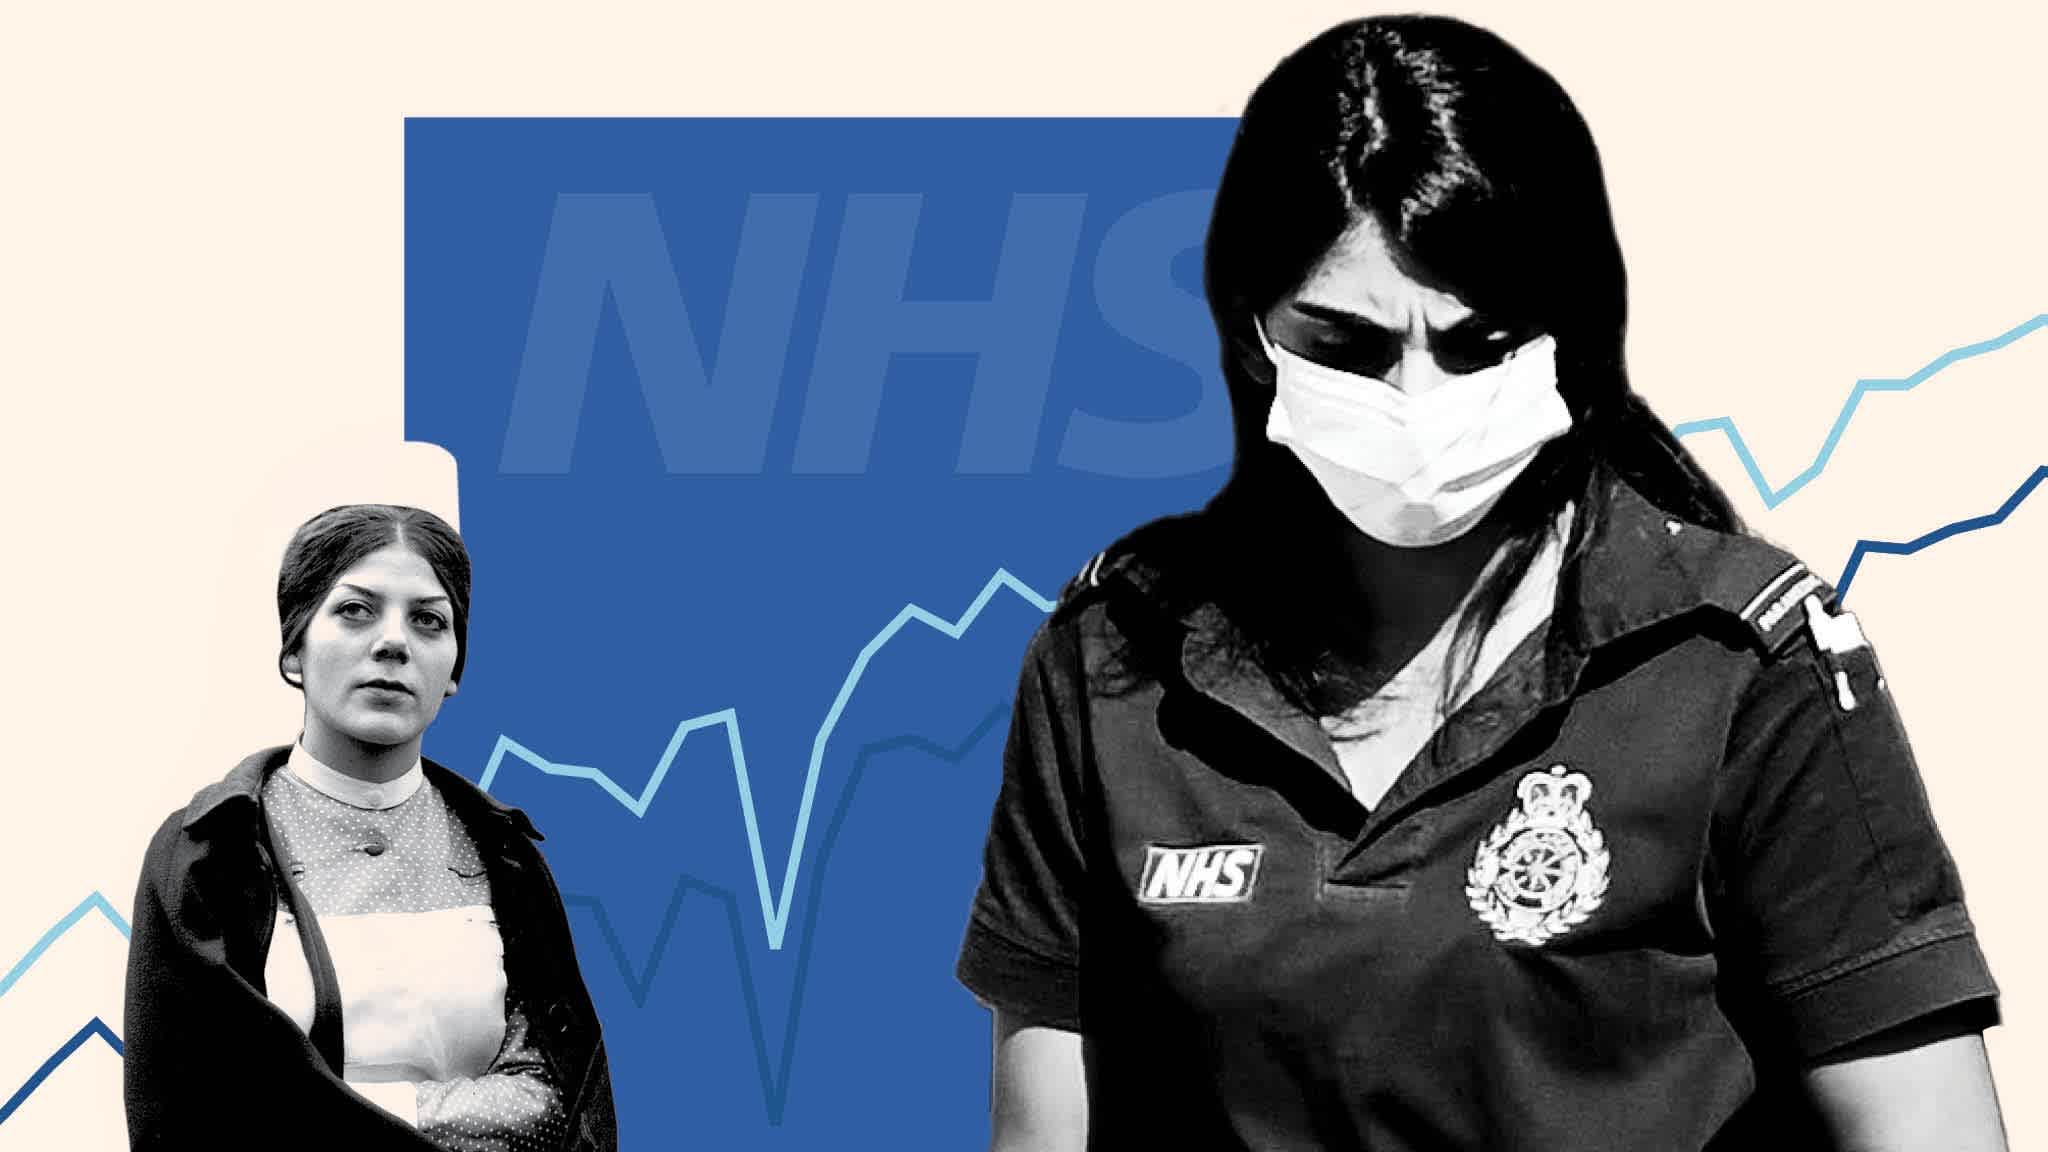 Cradle to grave: is Britain’s NHS broken?